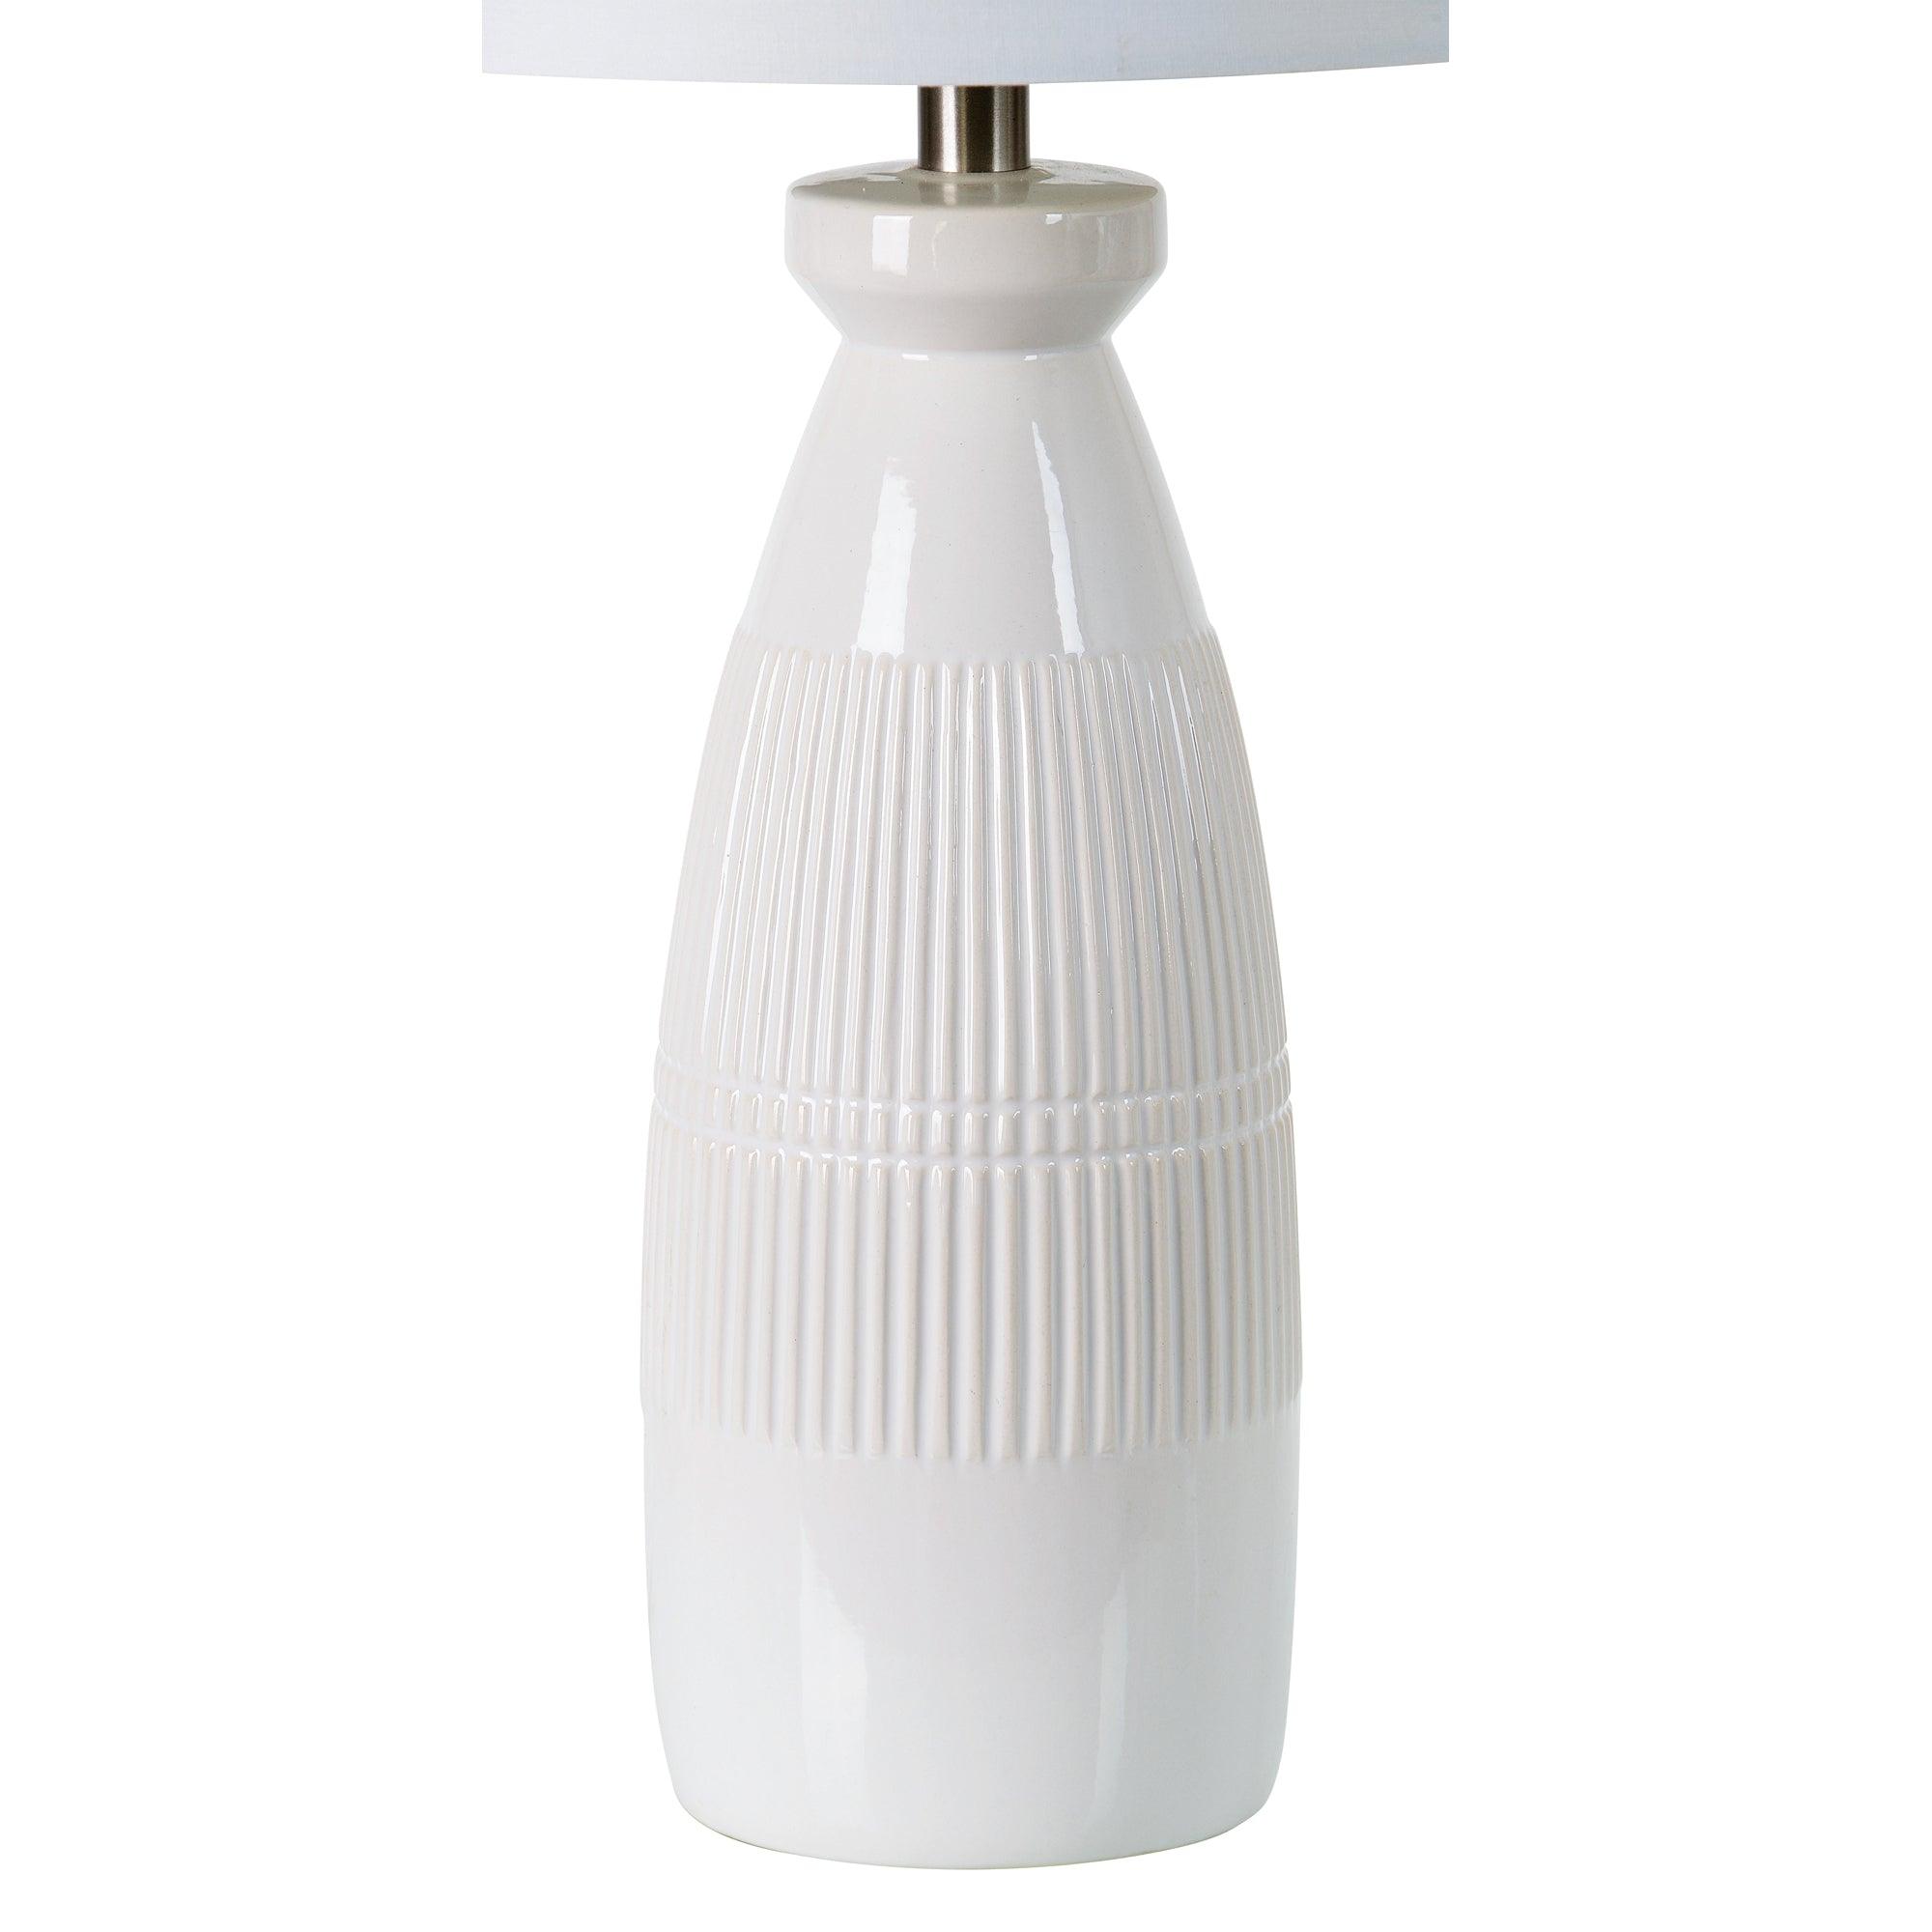 Renwil - Nado Table Lamp - LPT1233 | Montreal Lighting & Hardware